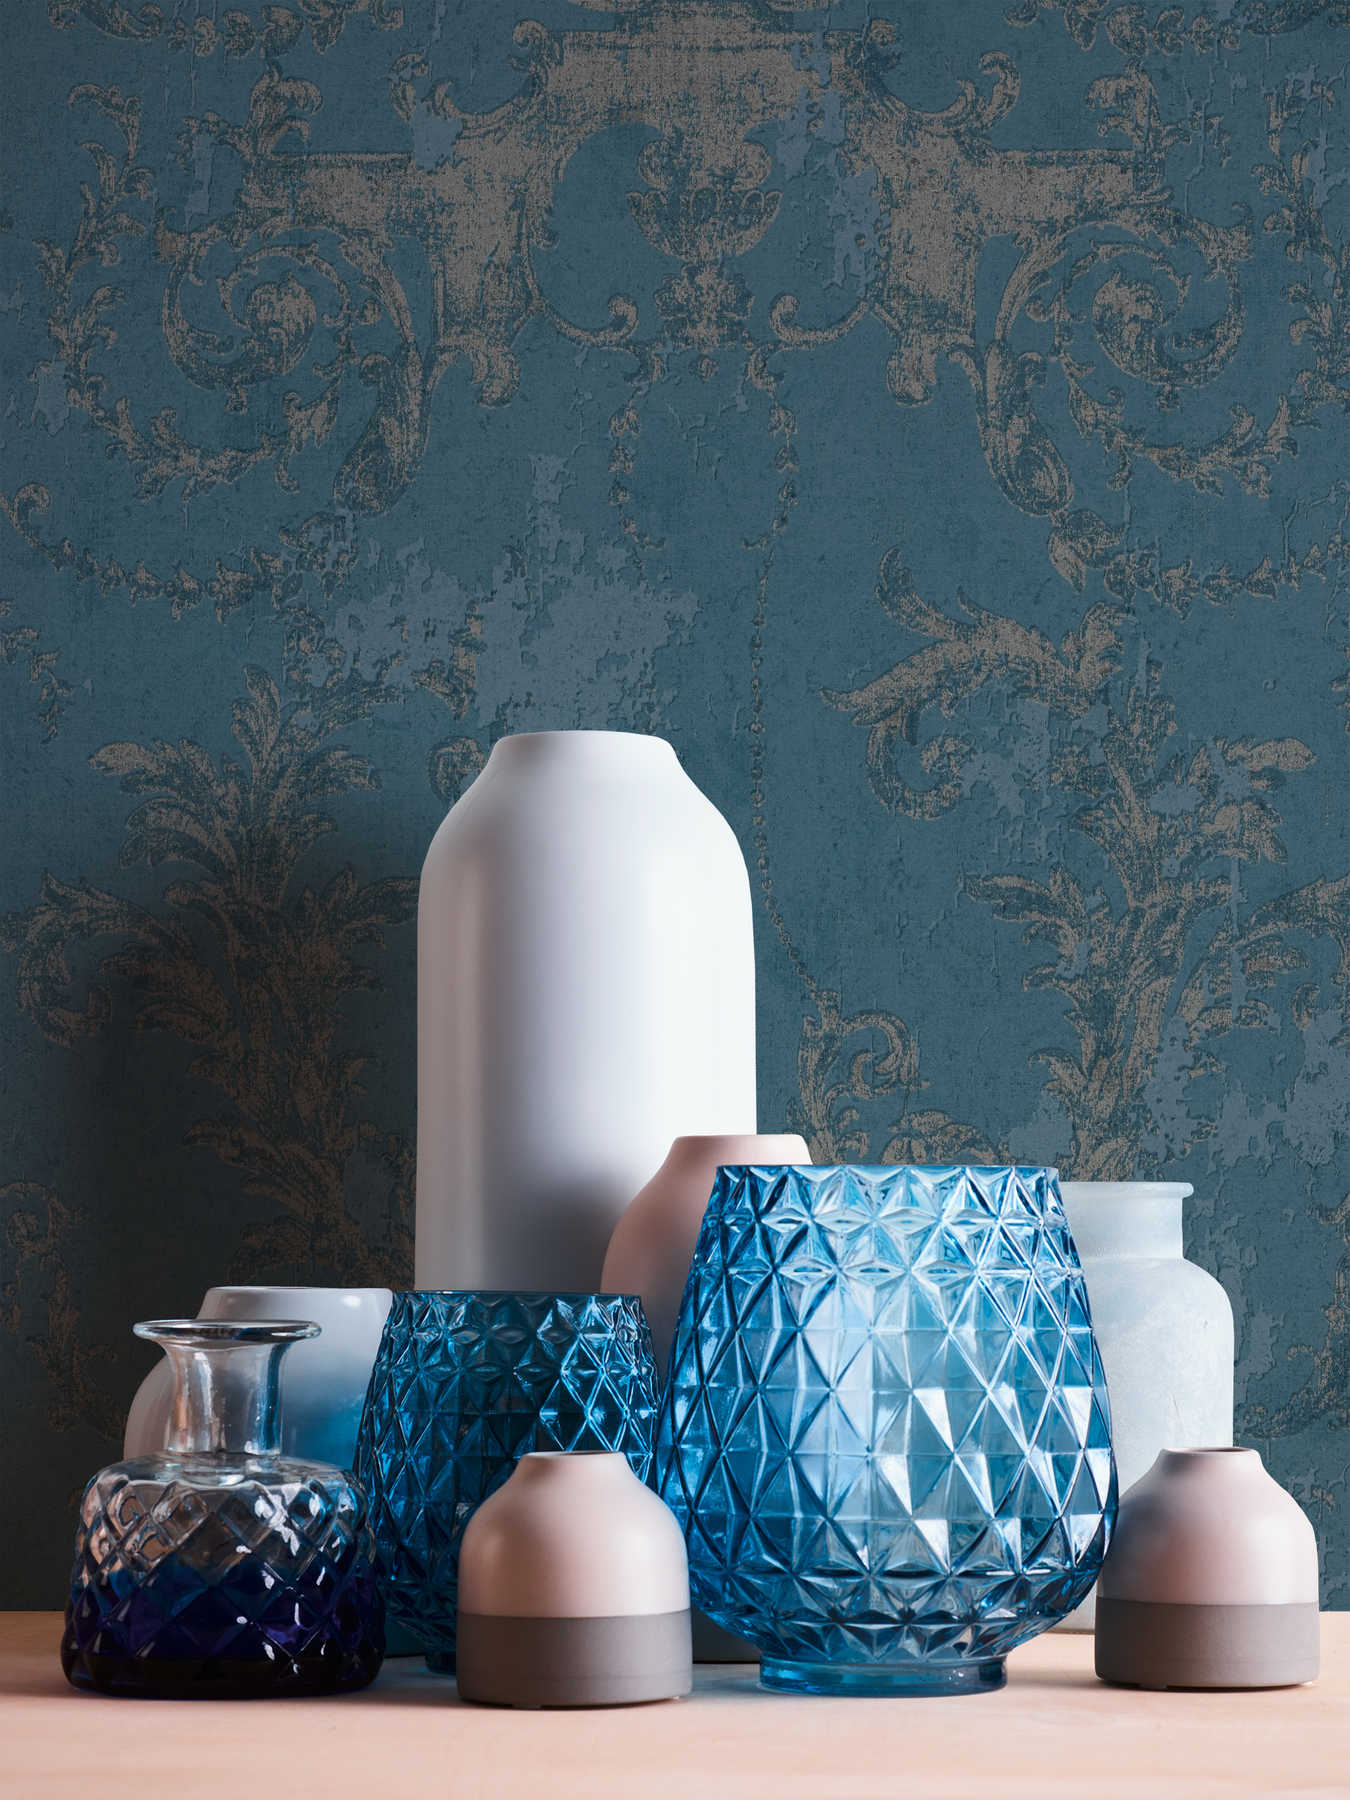             Ornamenttapete Vintage Stil & rustikal – Blau, Silber
        